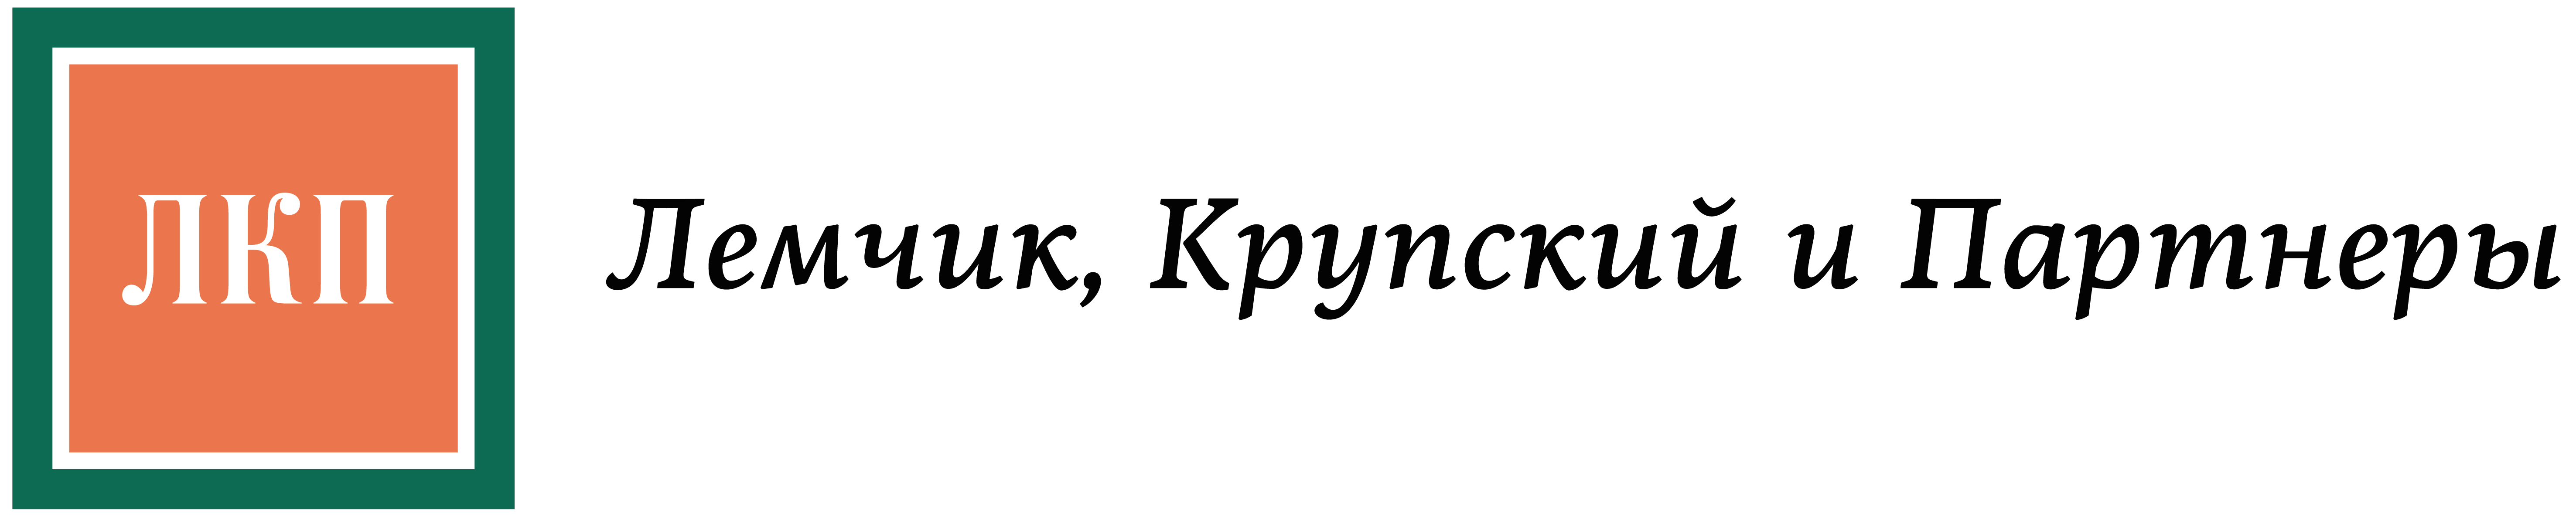 LKP-novyj-logo-nadpis-chernaya_7056811.png